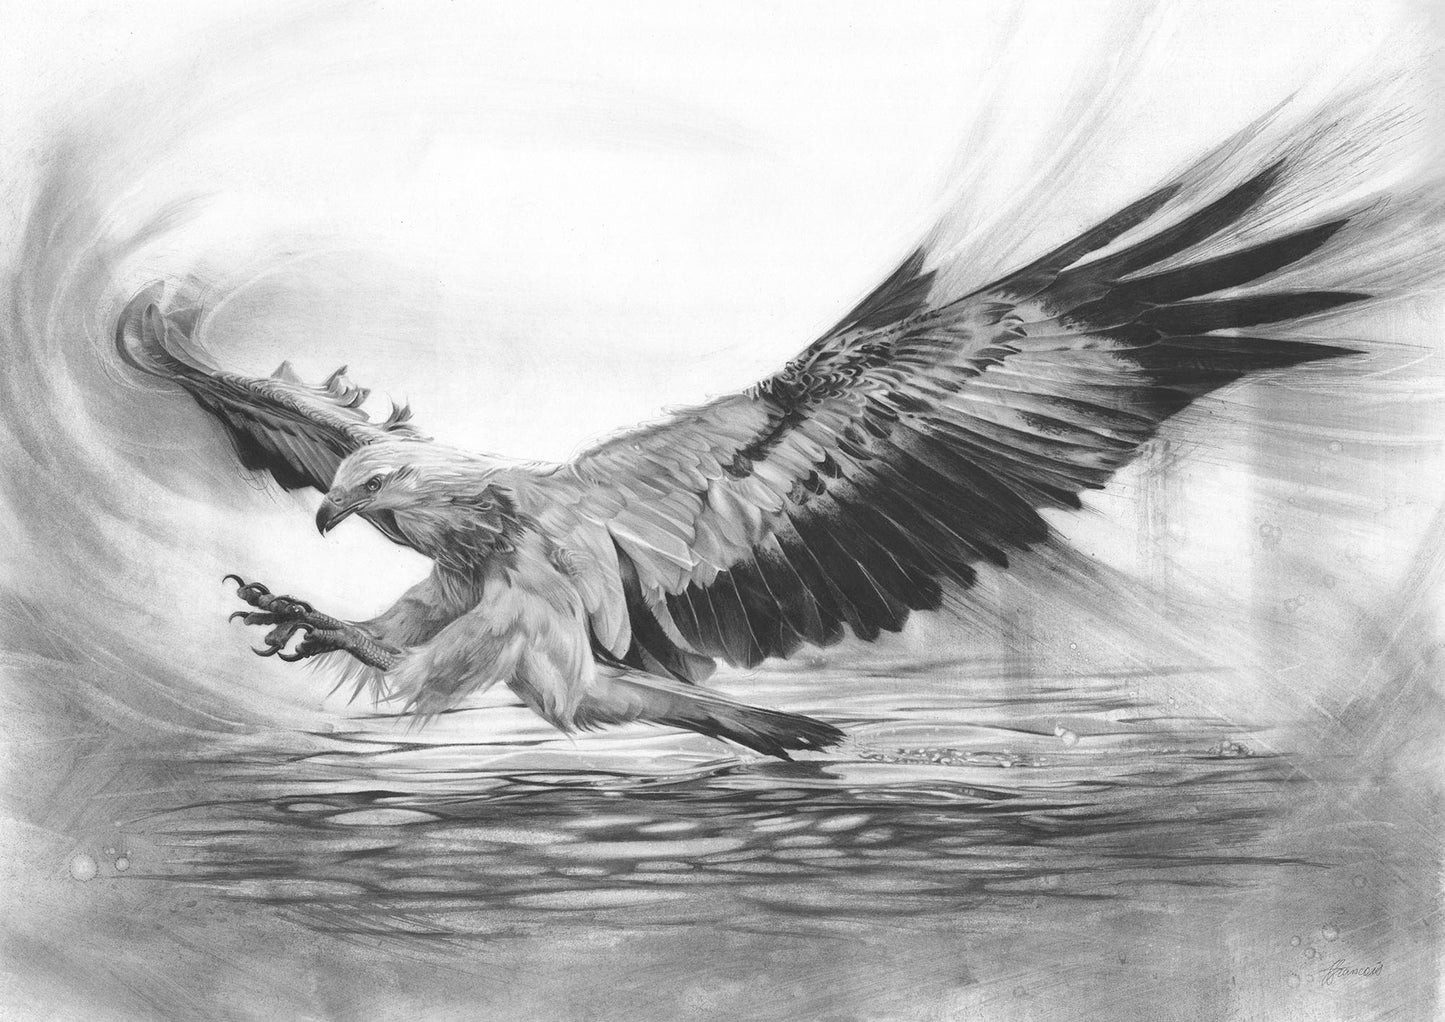 'White-bellied Sea Eagle' art print